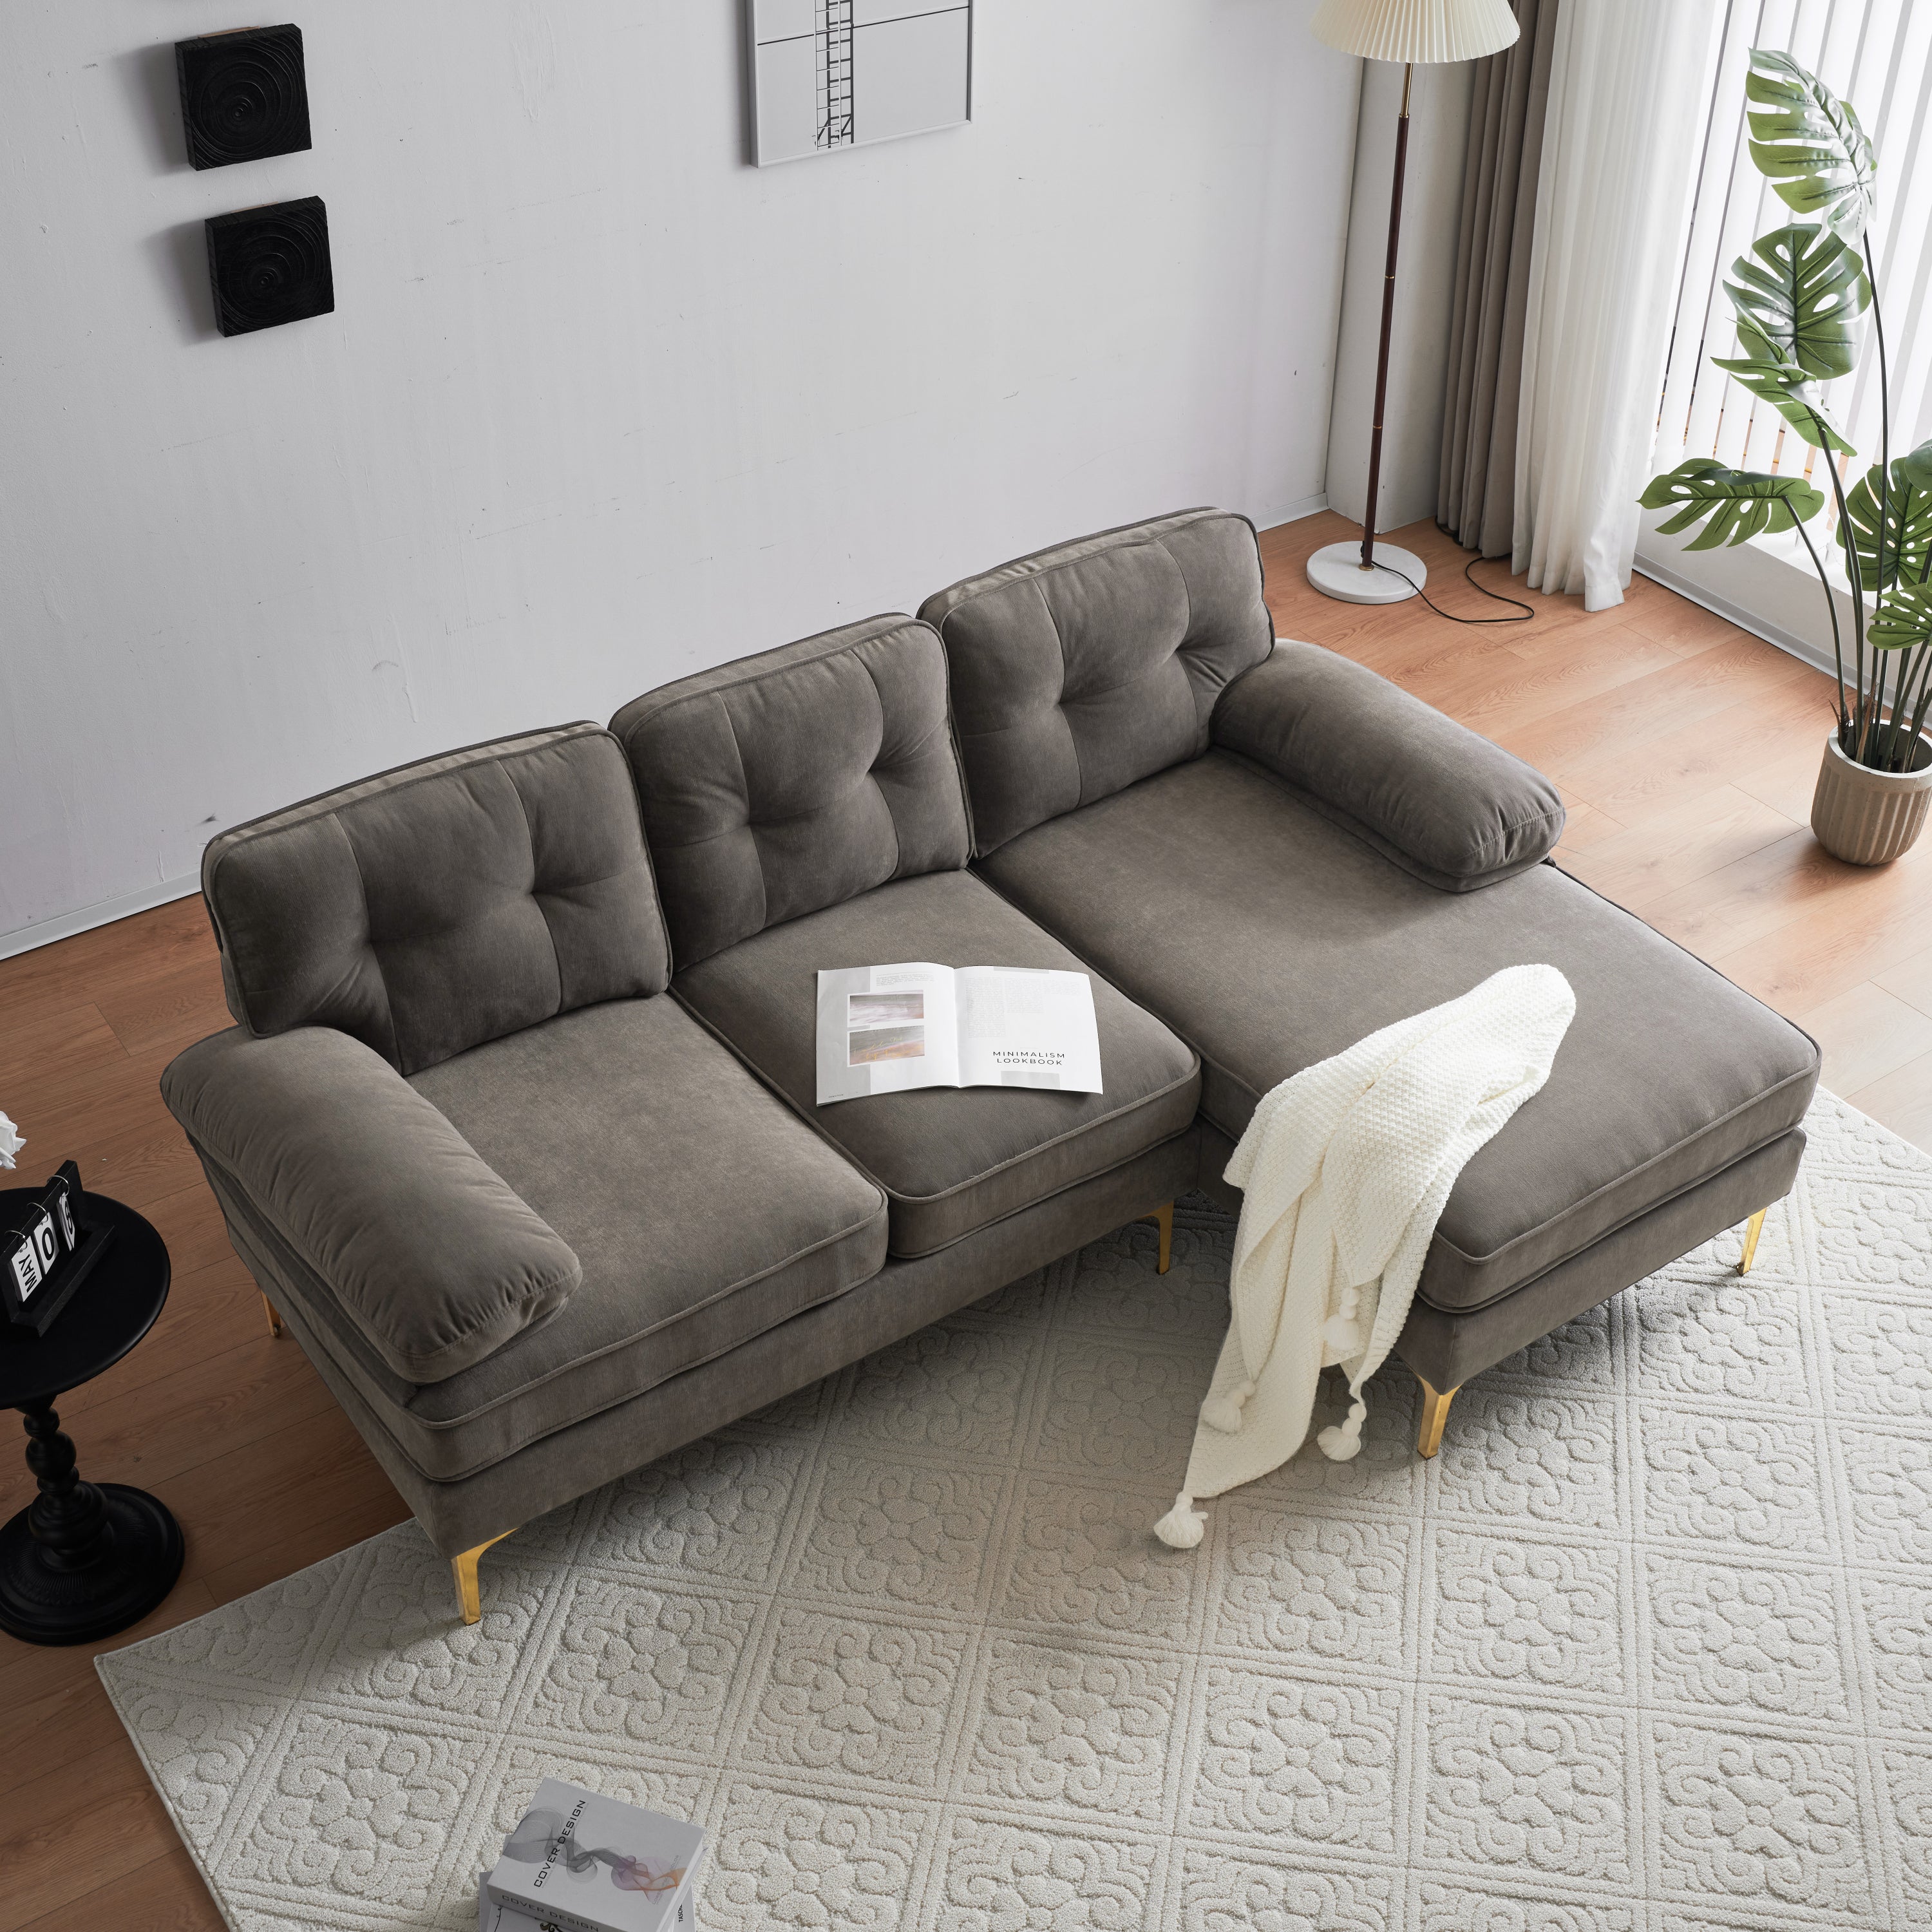 83" Modern Velvet L-Shaped Sectional Sofa for Living Room & Bedroom - Brown-Stationary Sectionals-American Furniture Outlet